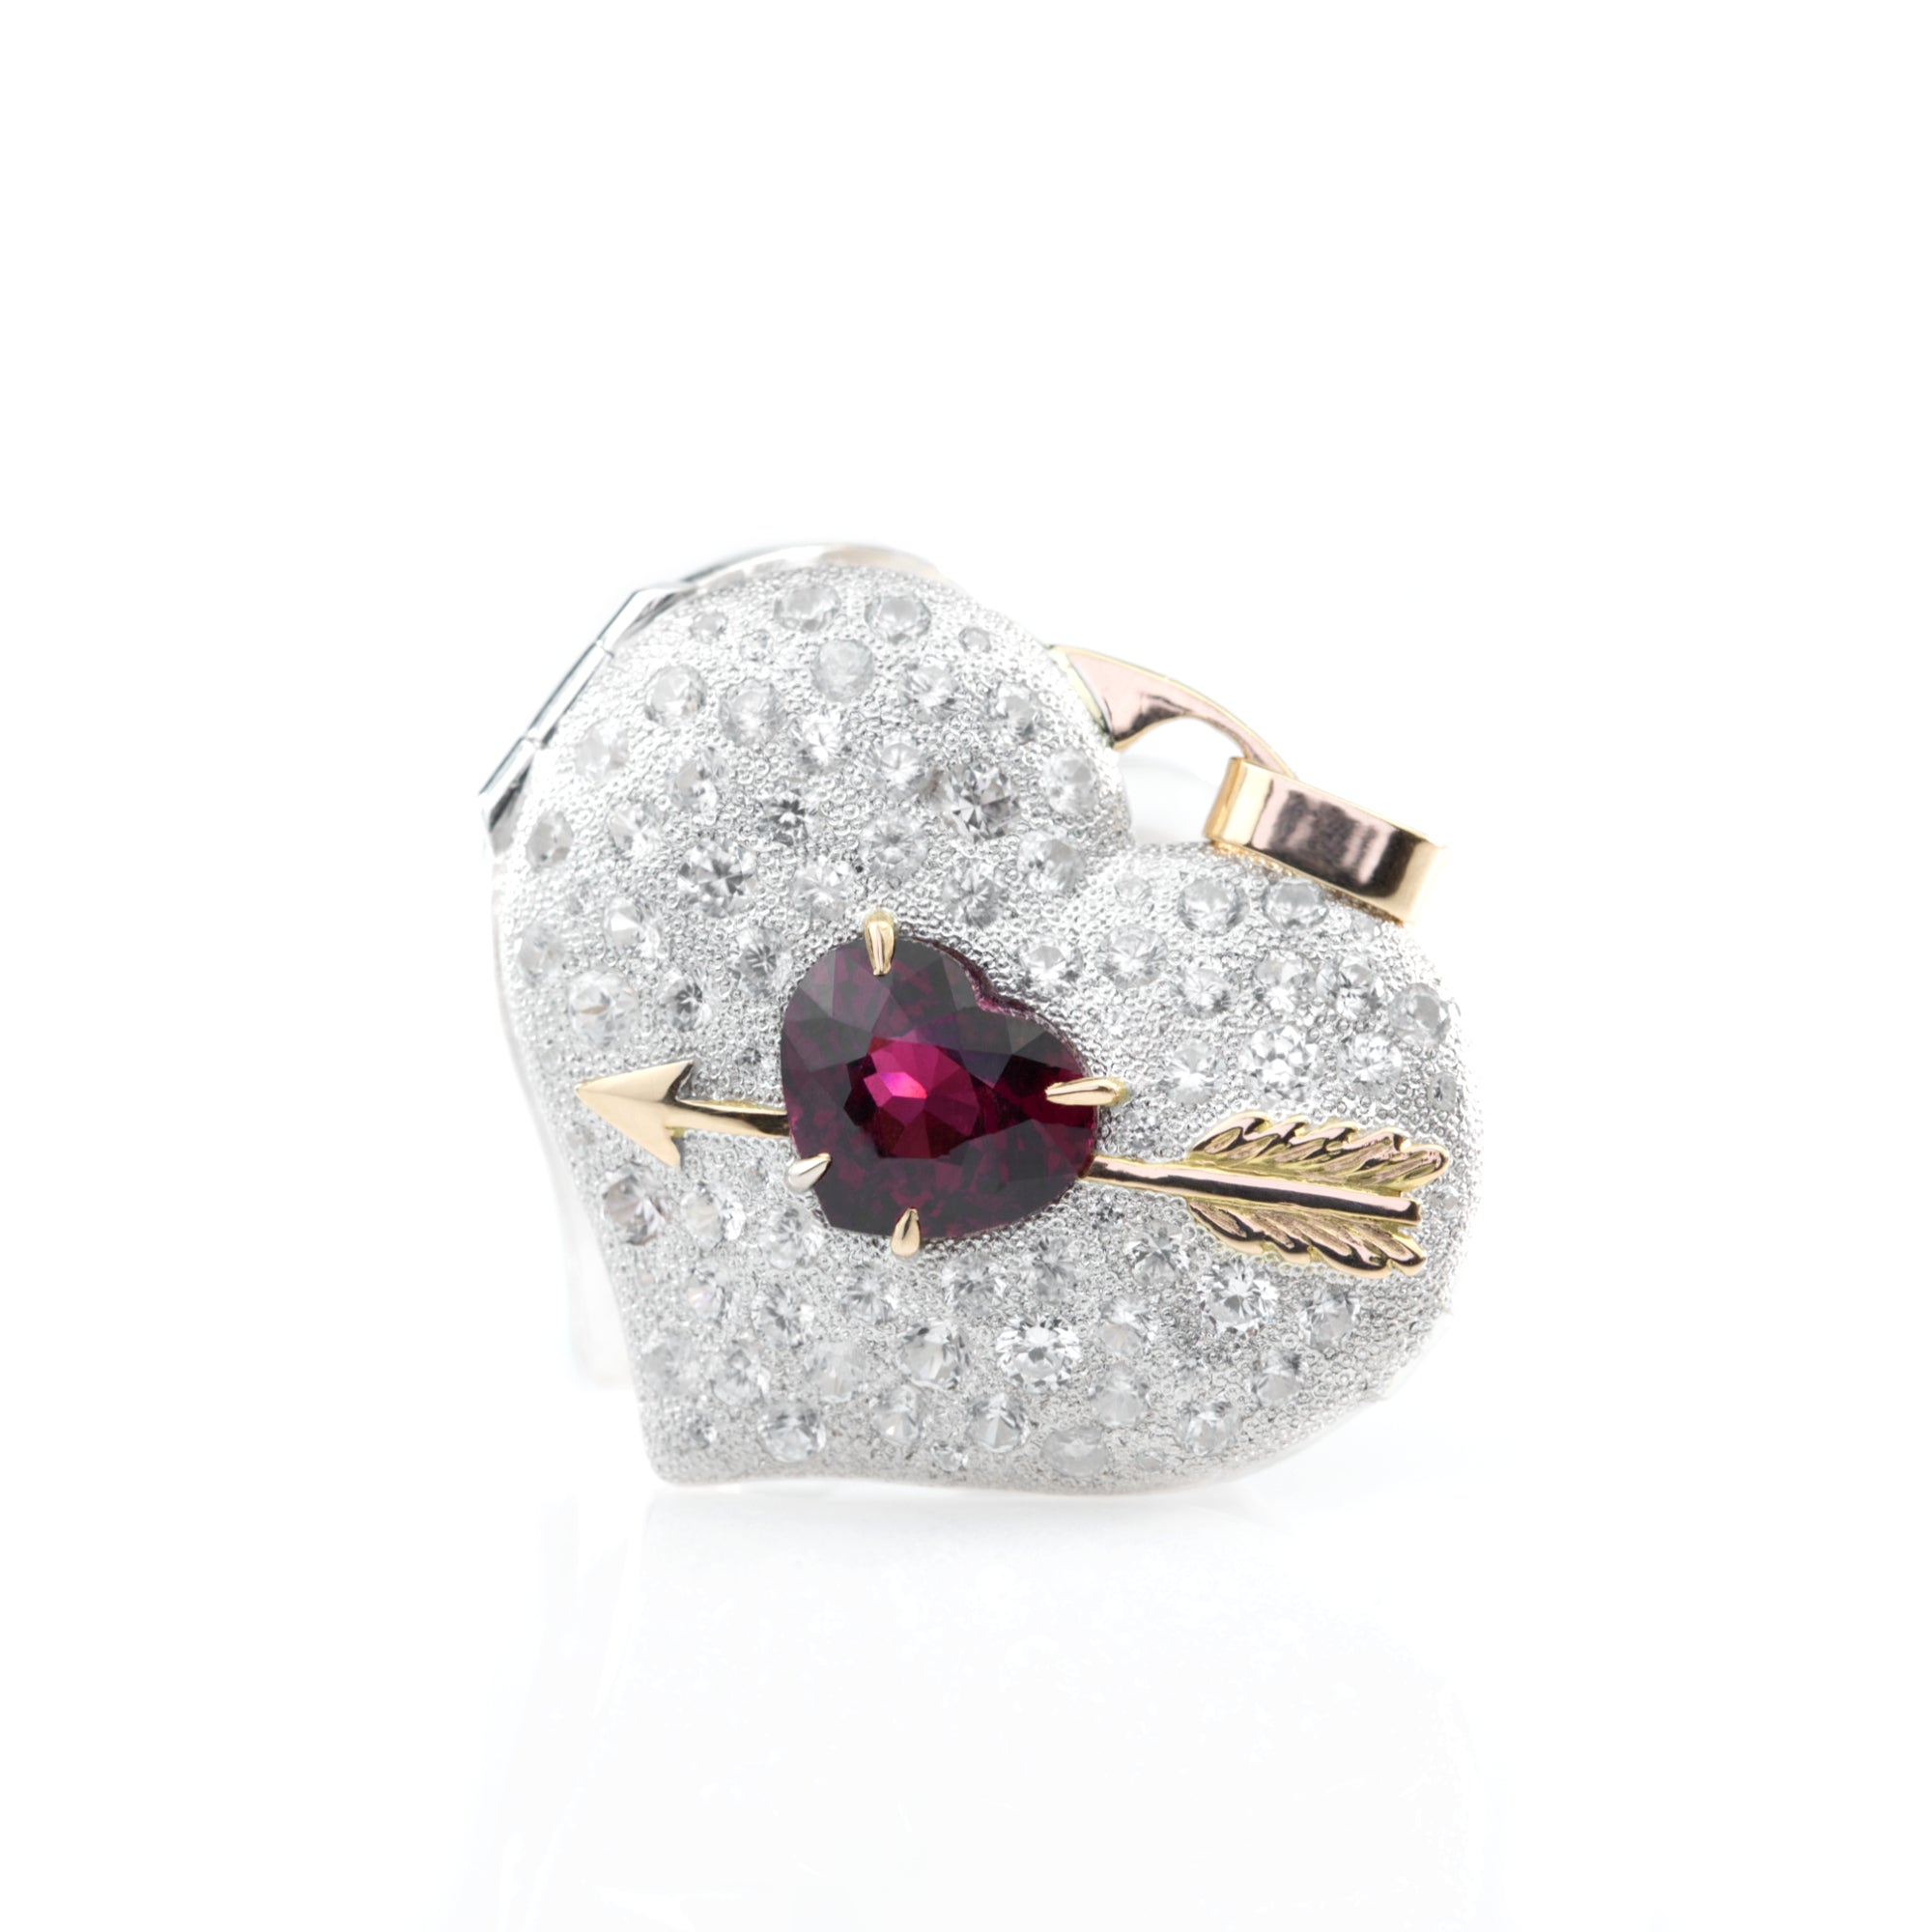 Rhodolite Garnet Heart Locket with white Zircon by Ewa Z. Sleziona Jewellery - front